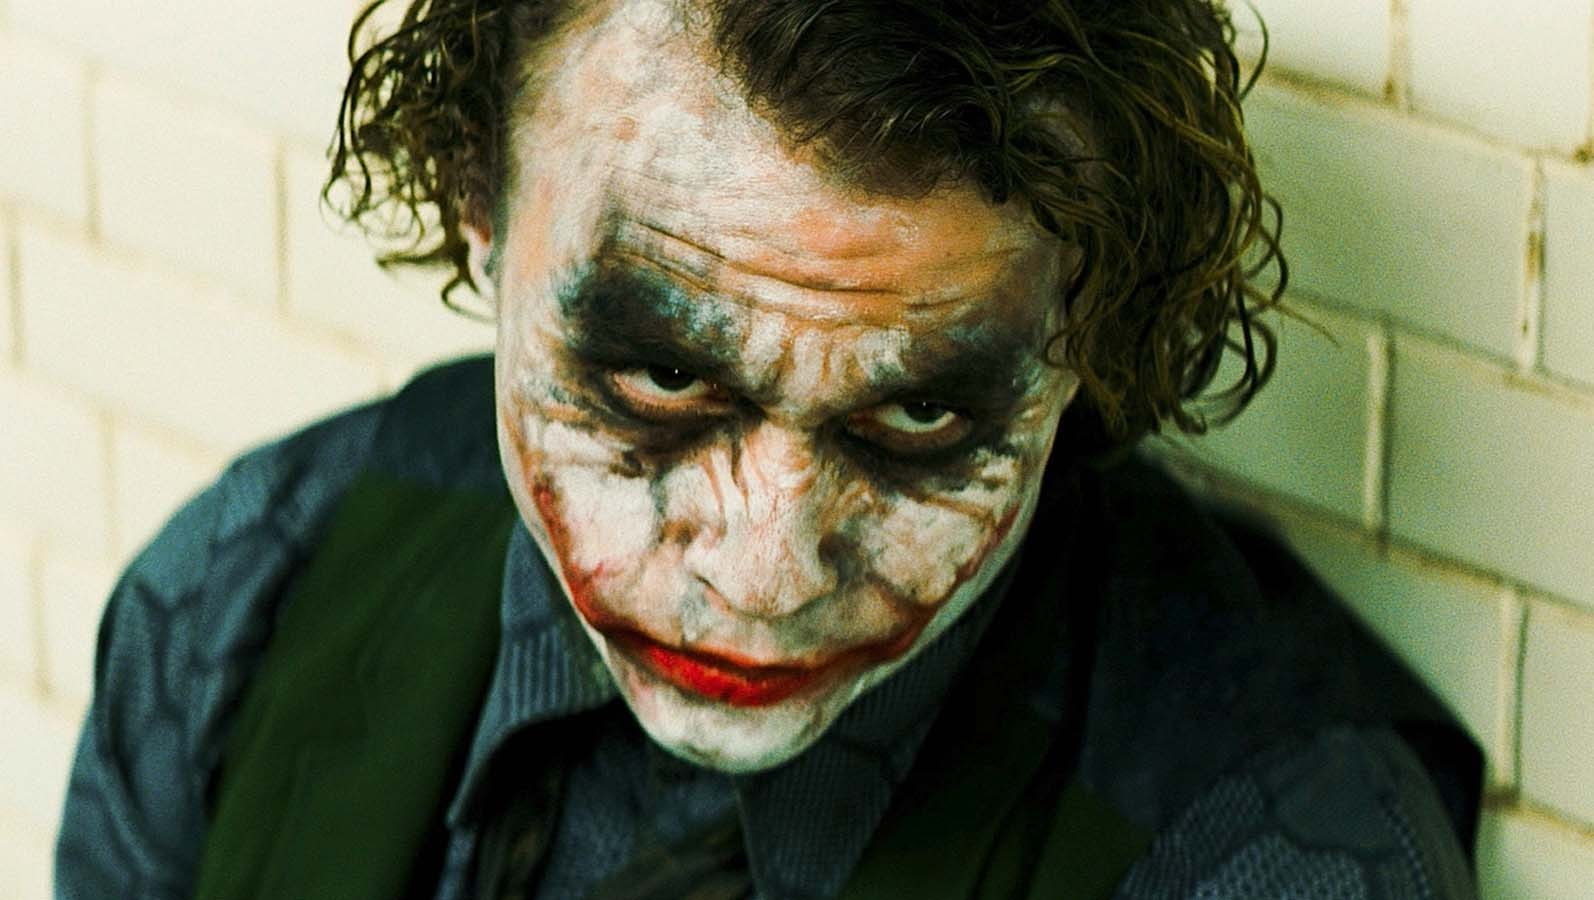 Joker, Heath Ledger, The Dark Knight, portrait, one person